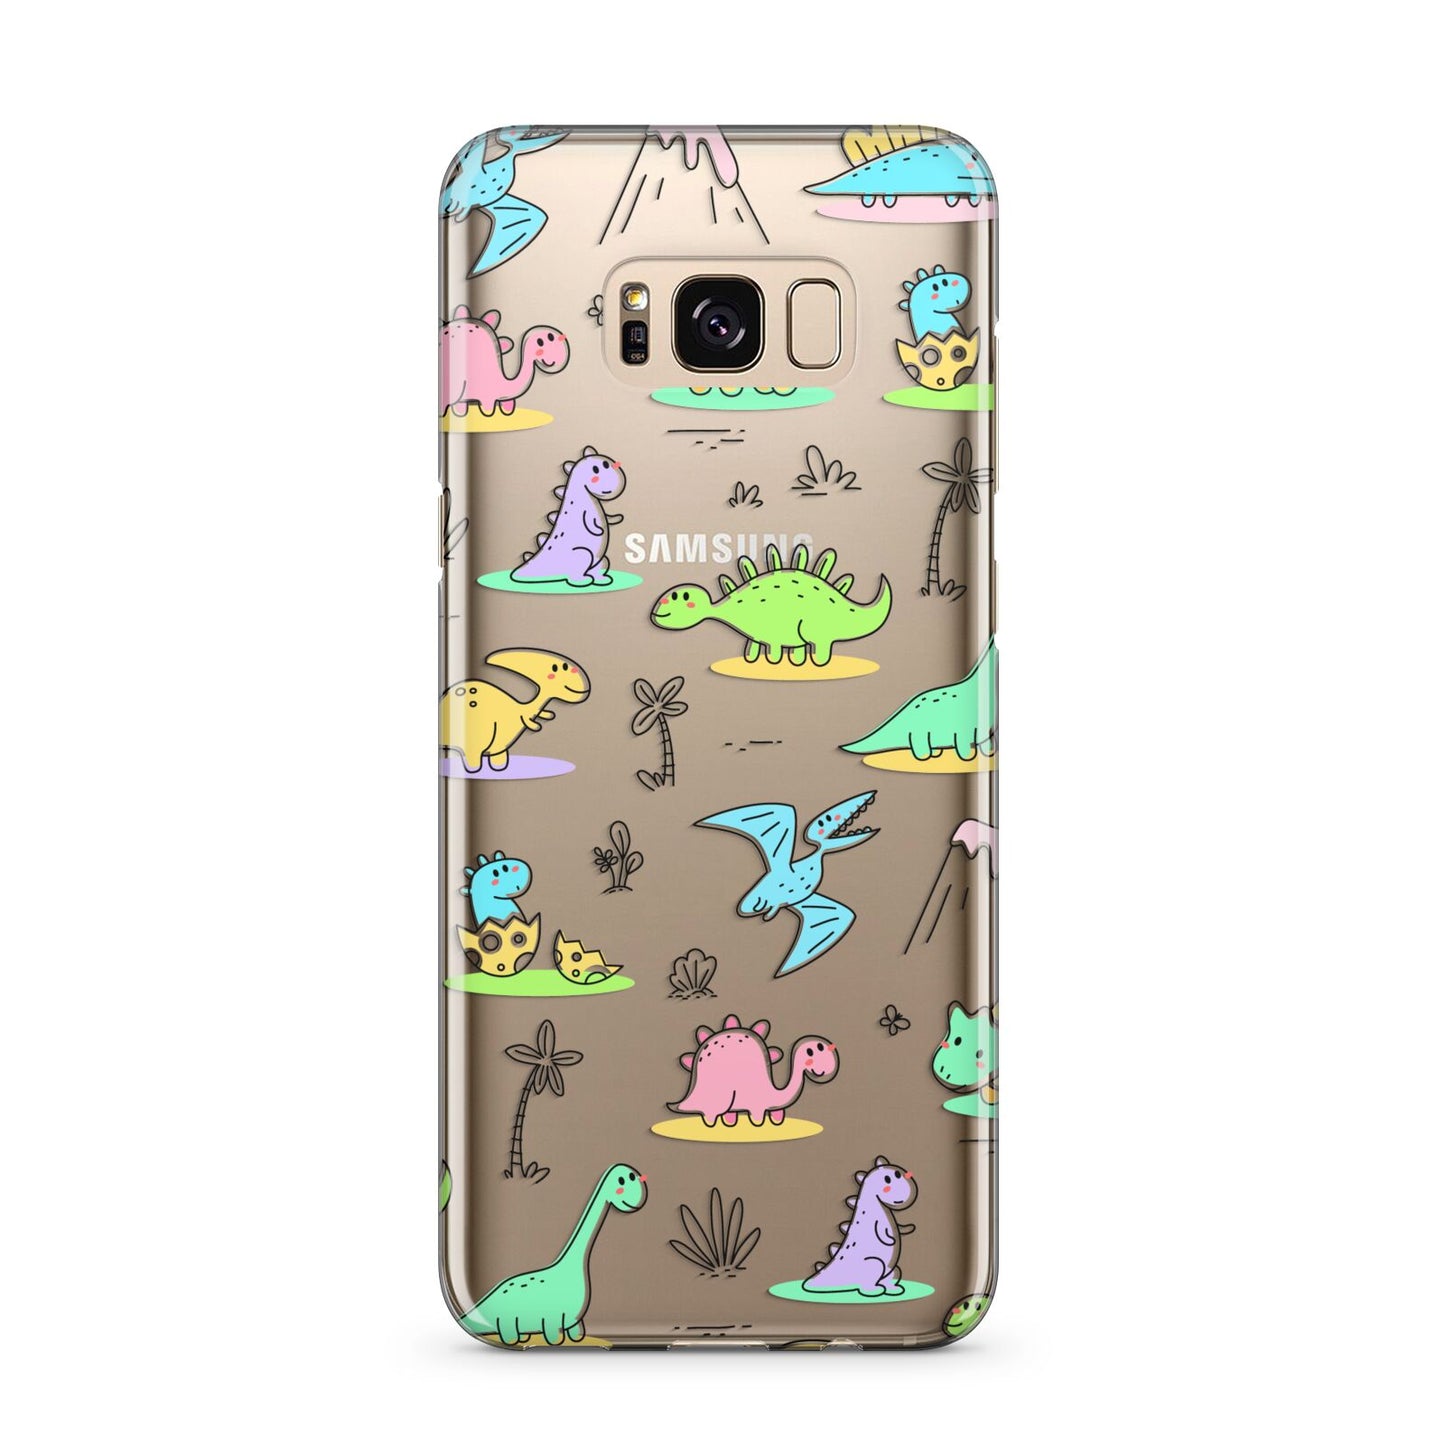 Dinosaur Samsung Galaxy S8 Plus Case